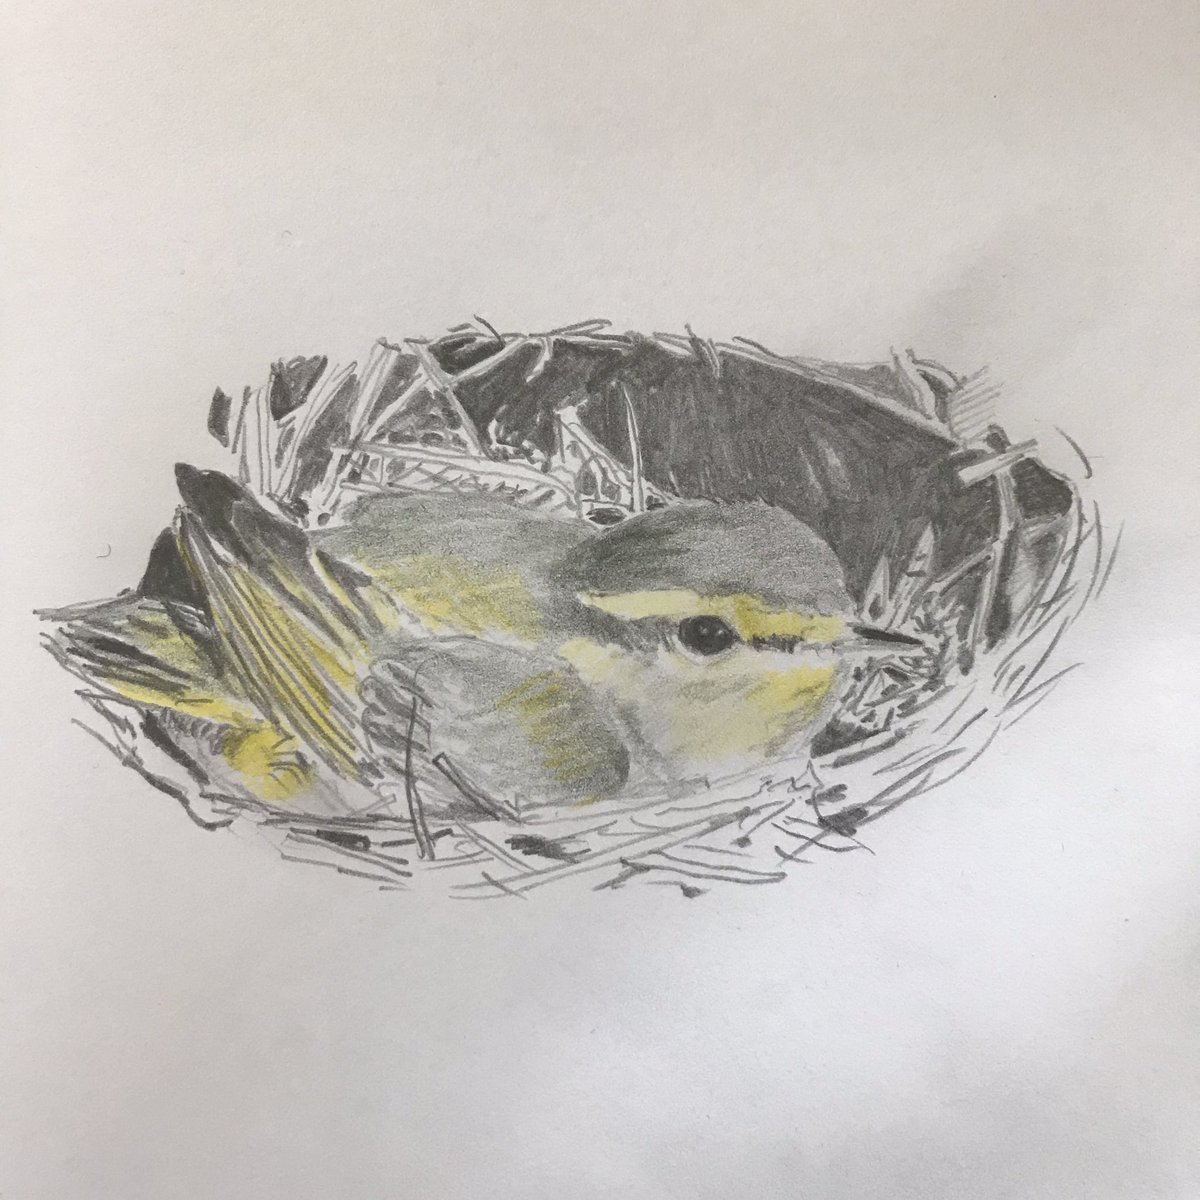 11/04/20
#WoodWarbler #slightlylongerthan10minutesketch #drawing #bird